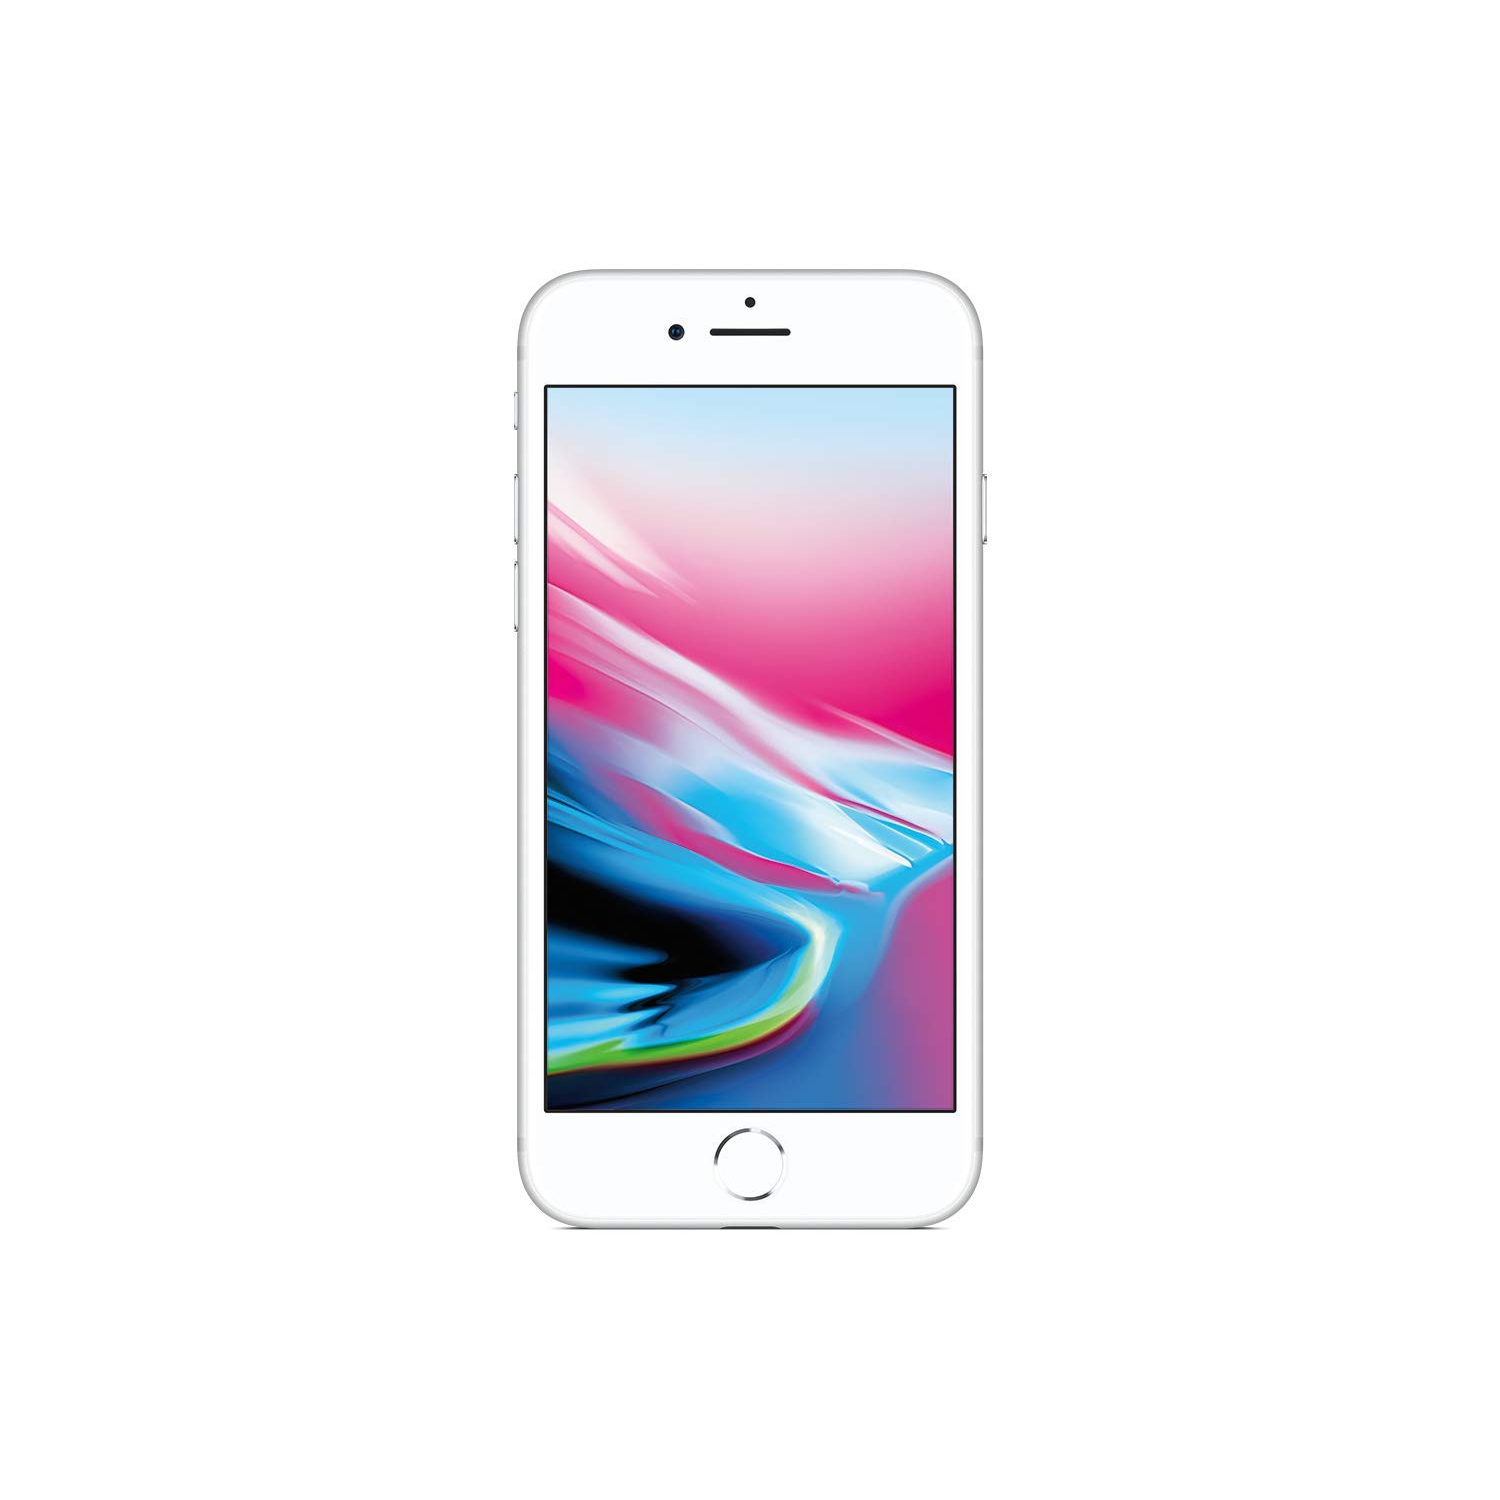 Refurbished (Excellent) - Apple iPhone 8 256GB Smartphone - Silver - Unlocked - Certified Refurbished